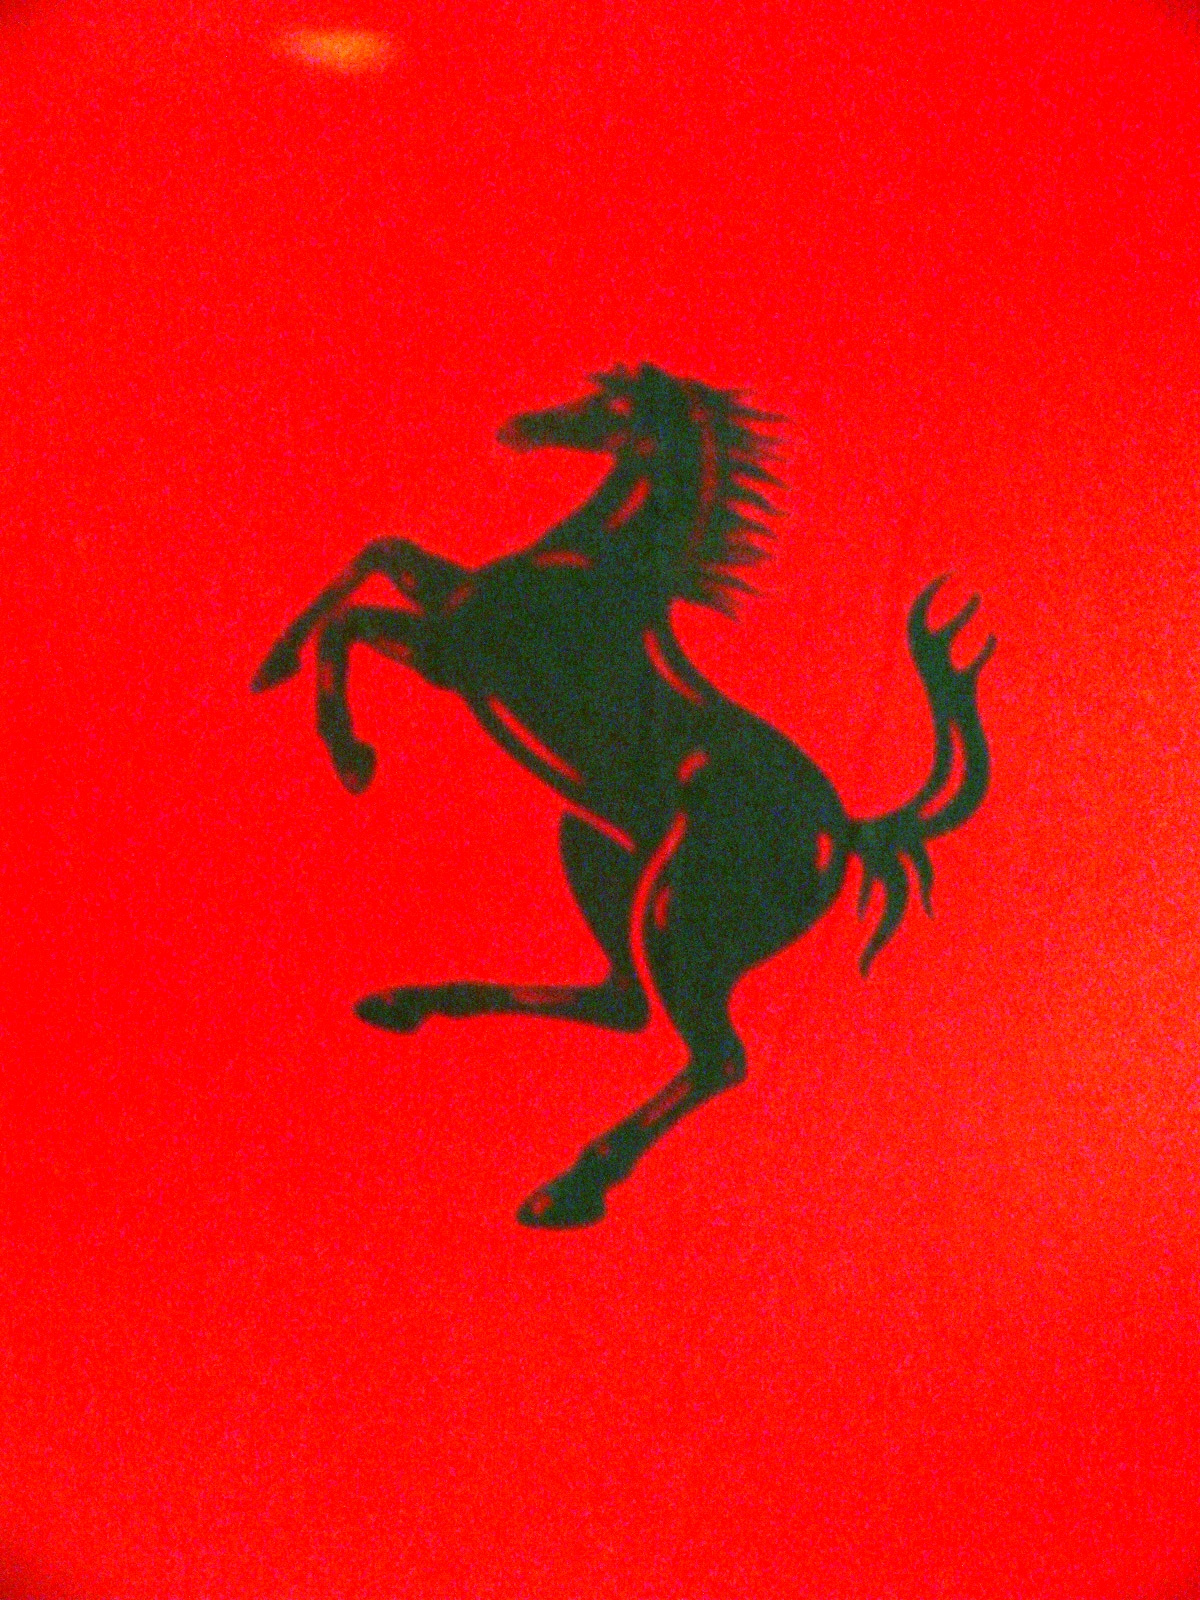 Ferrari takaró